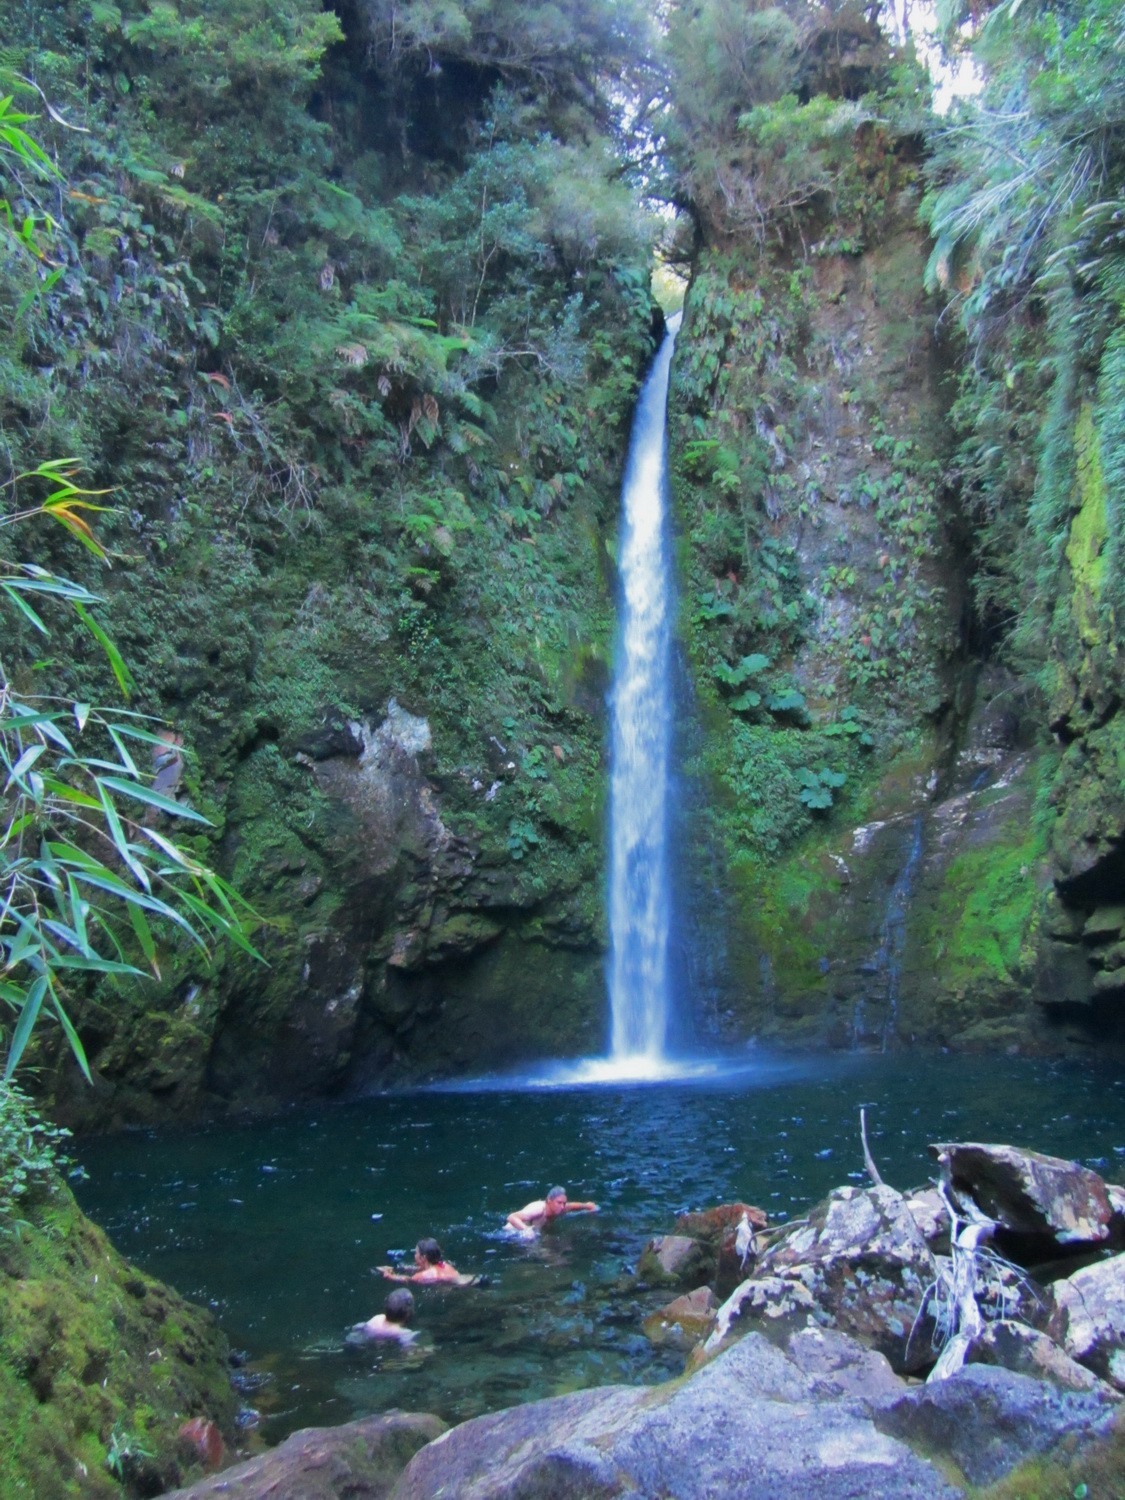 Swimming in the pool of the lower waterfall Cascada Baja